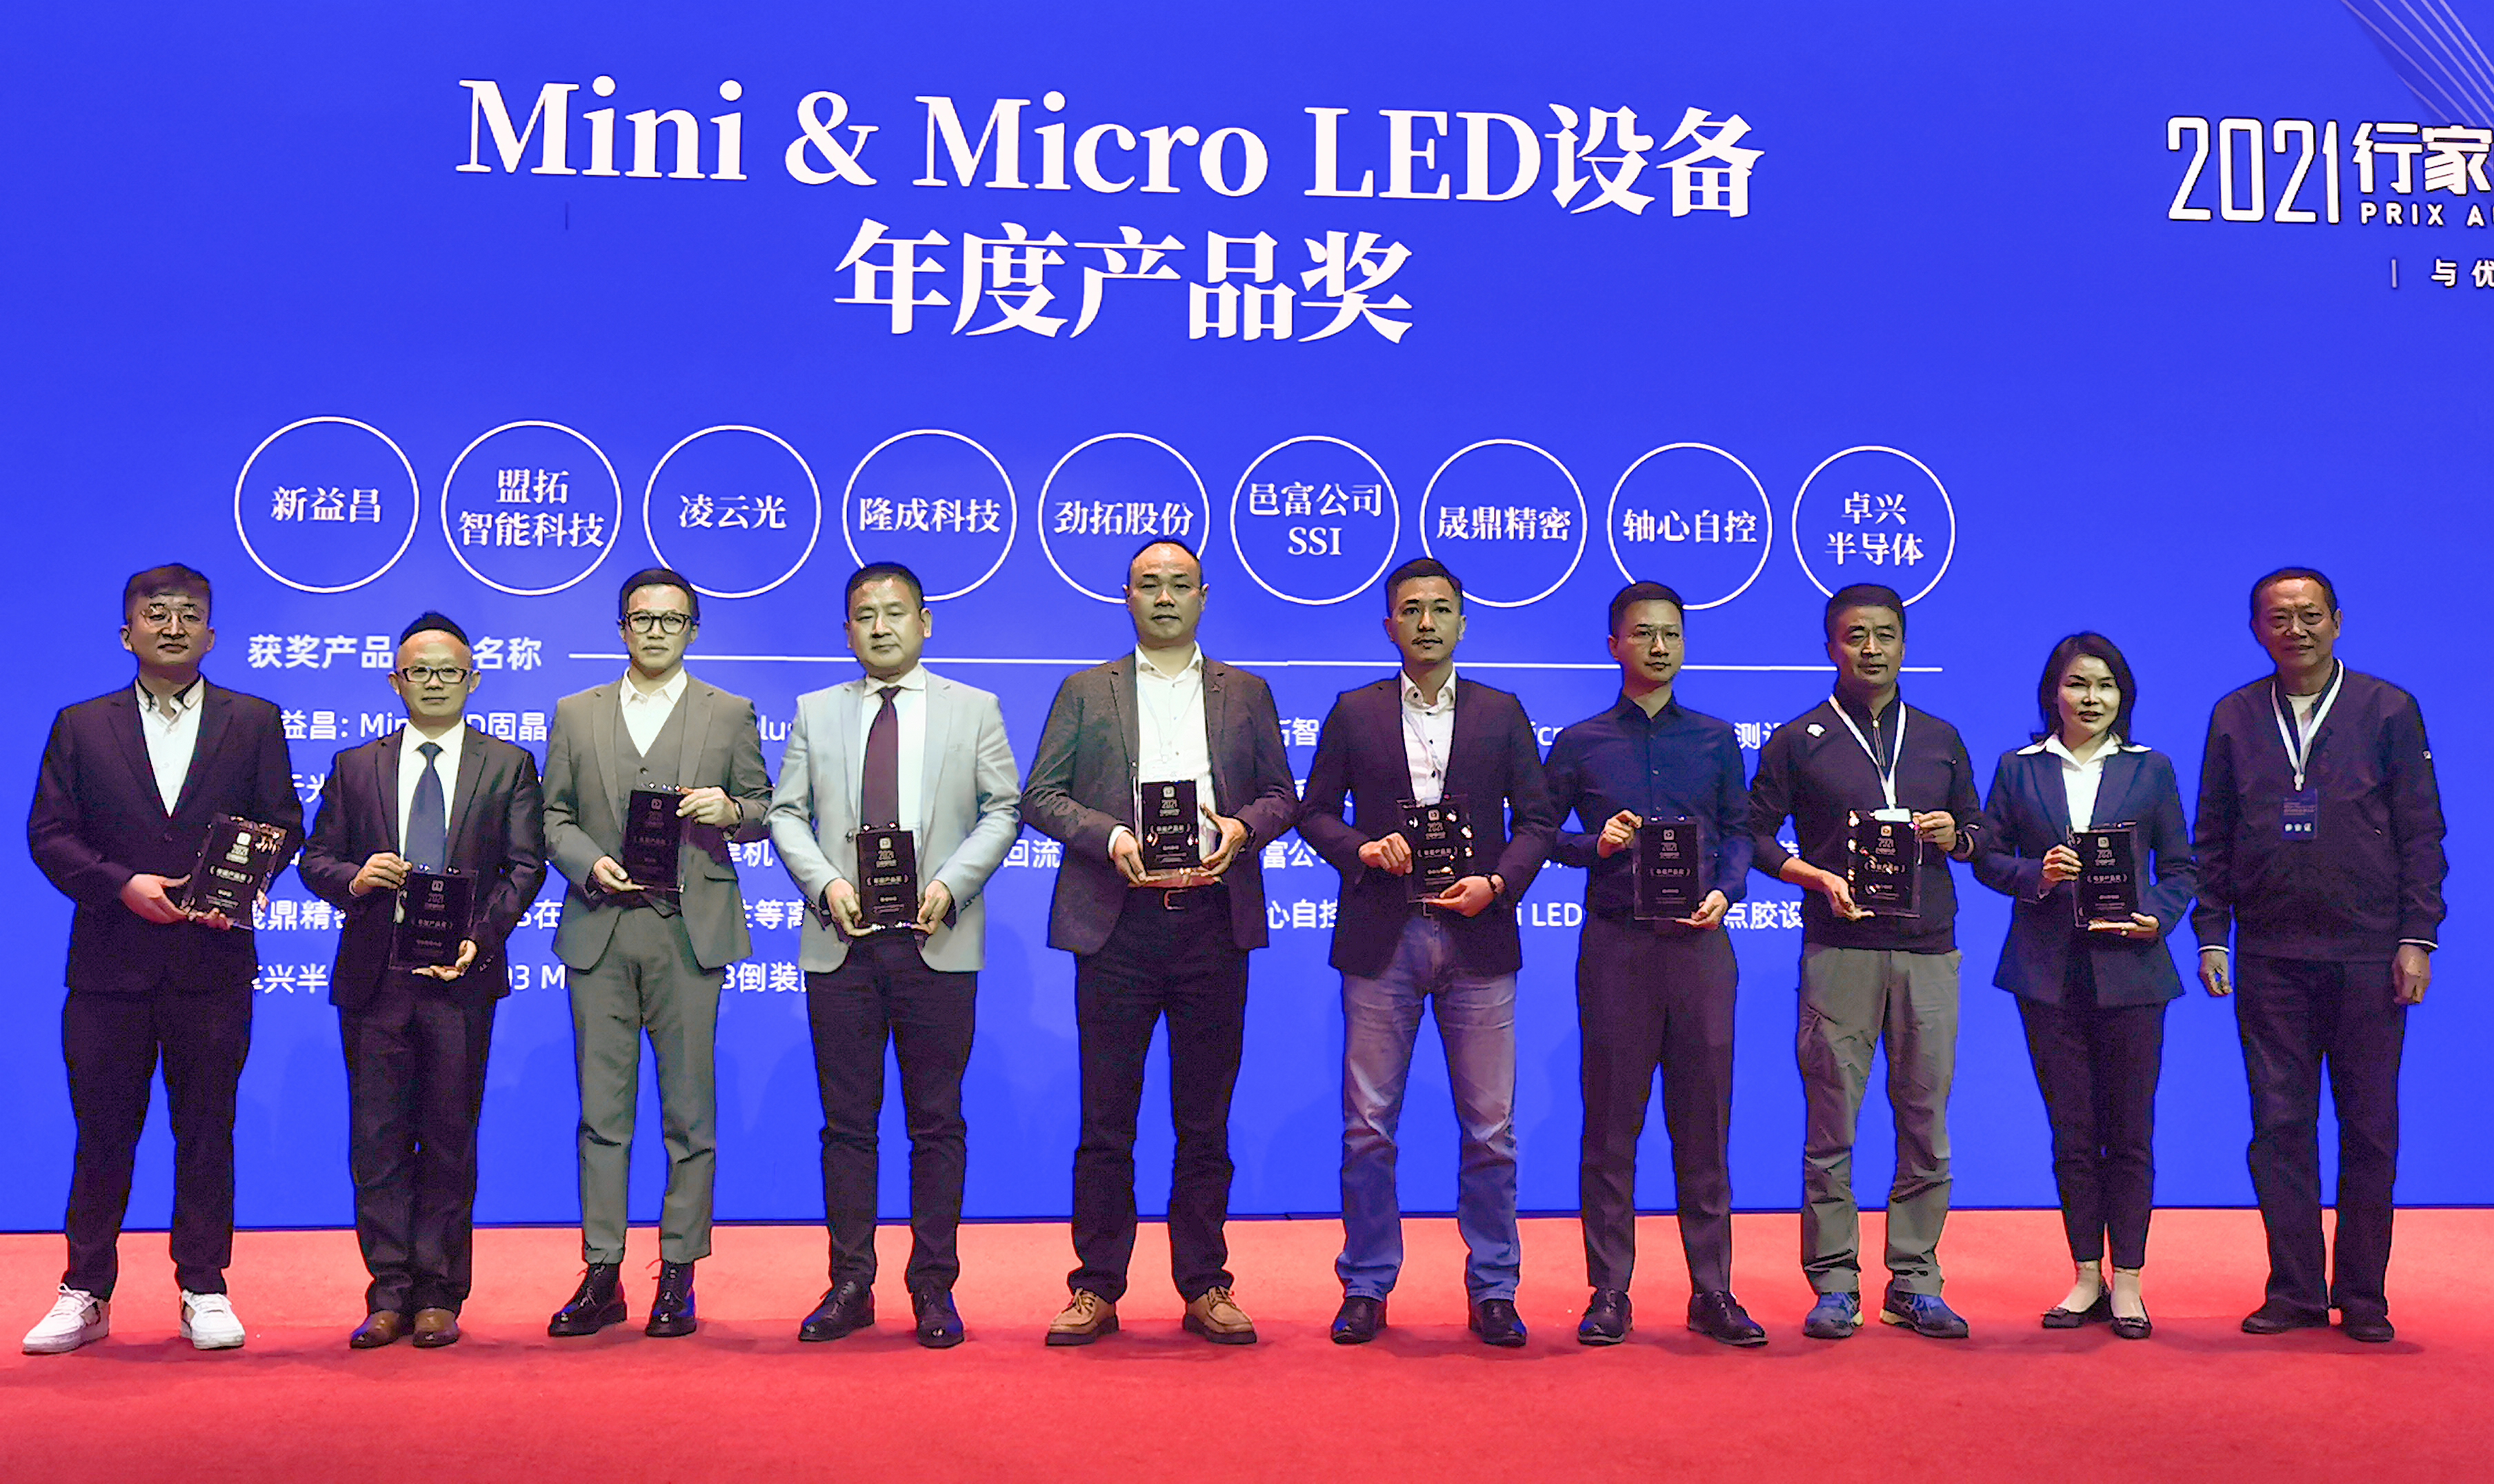 j9.com九游会AKT系列回流焊荣获“Mini LED”2021行家极光奖--年度产品奖